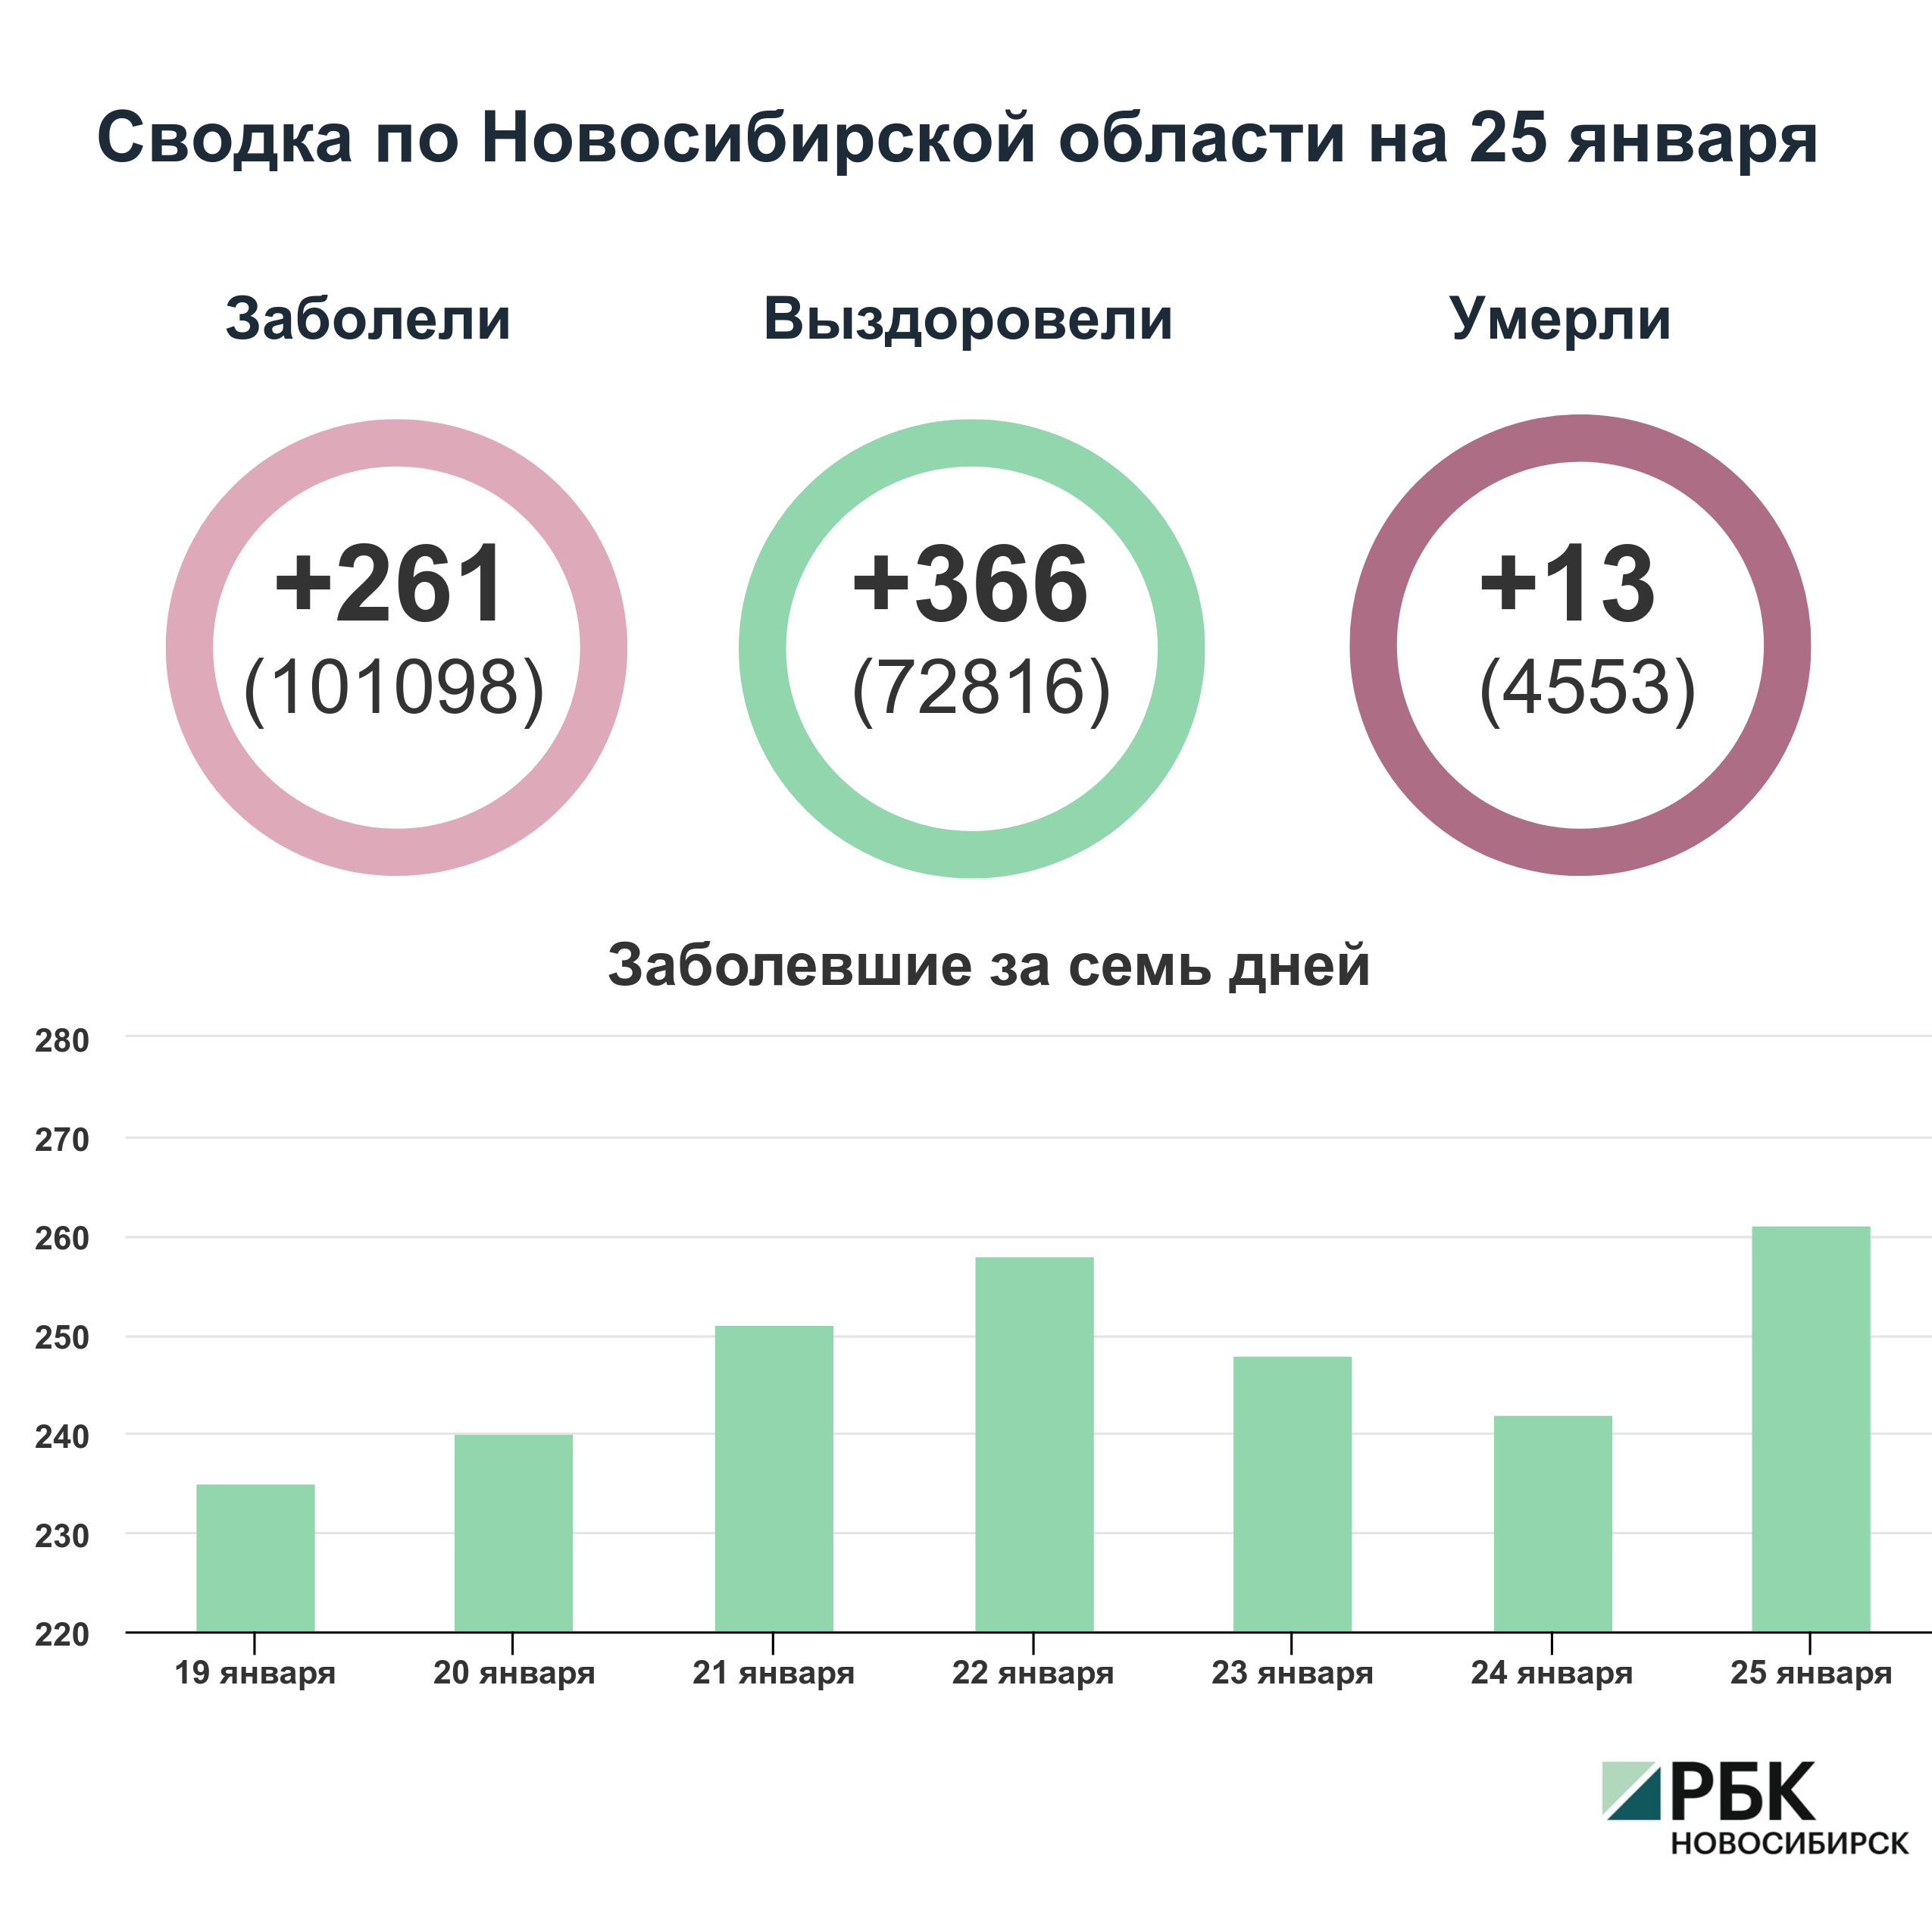 Коронавирус в Новосибирске: сводка на 25 января